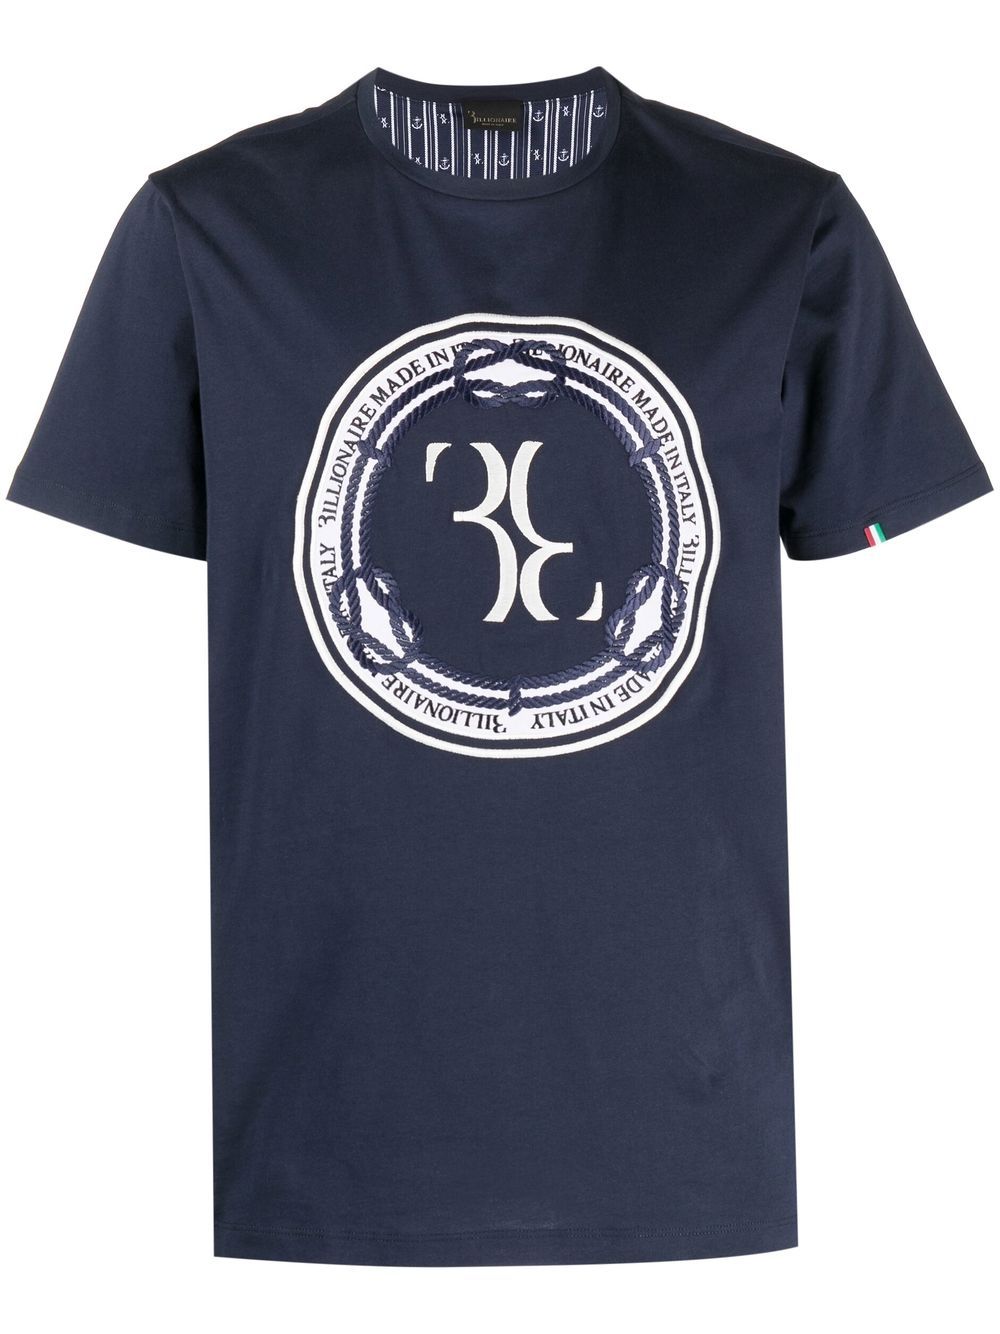 Billionaire logo-print T-shirt - Blue von Billionaire